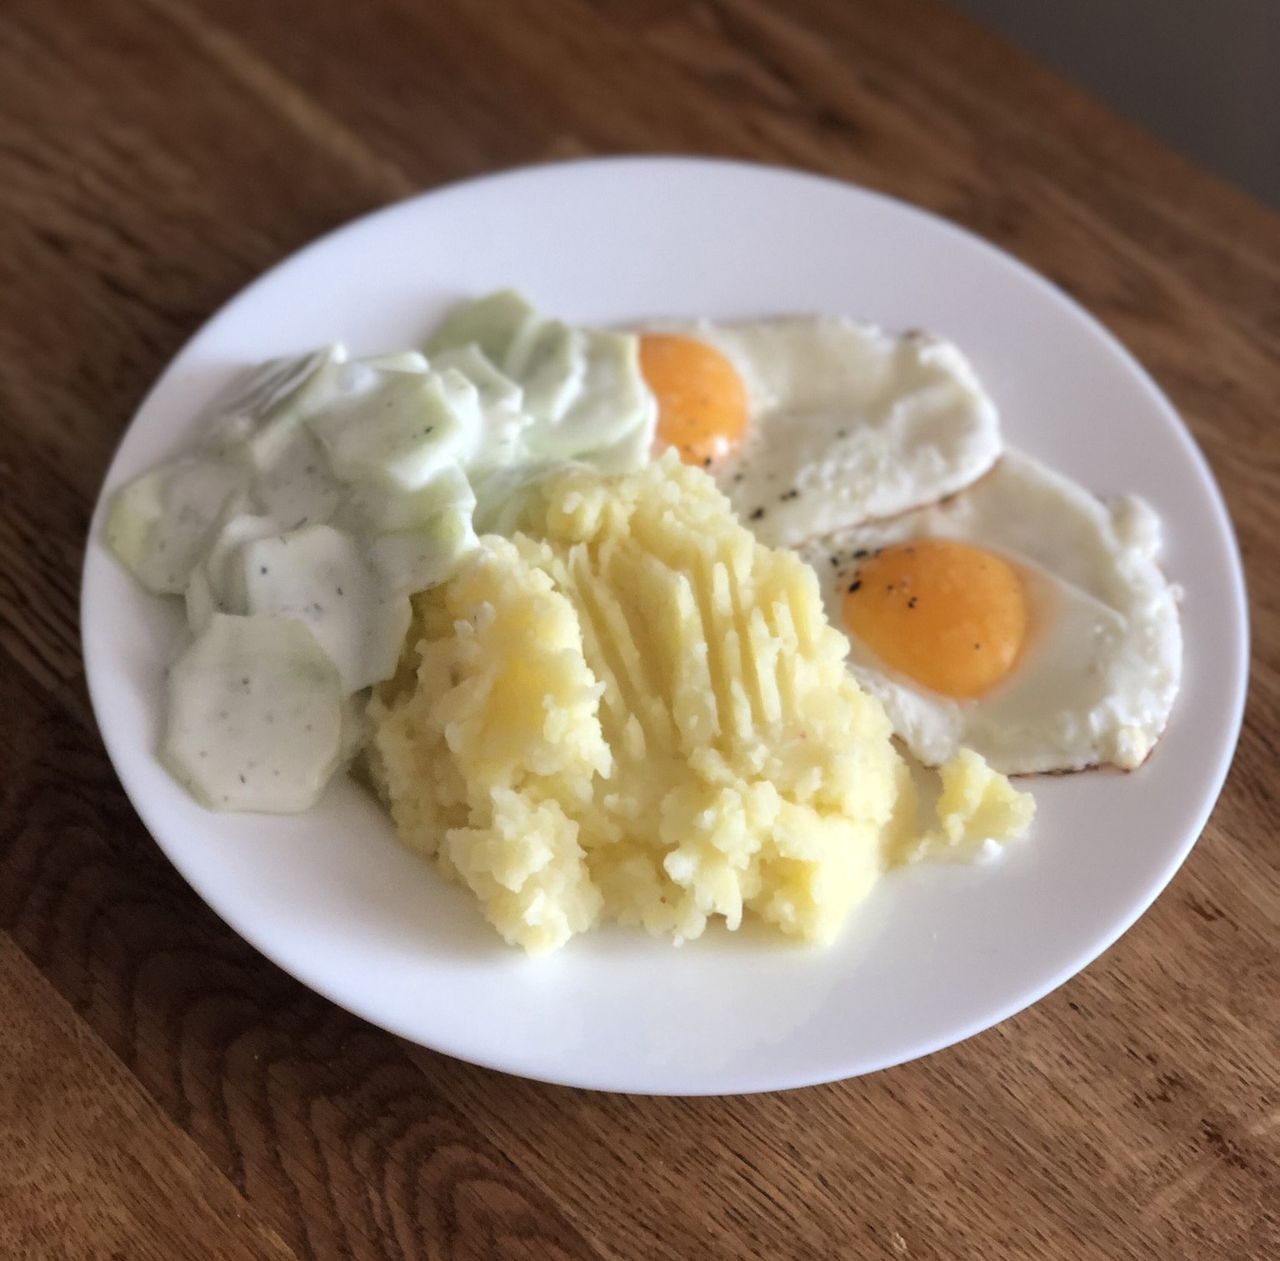 Jajka sadzone, mizeria i ziemniaki